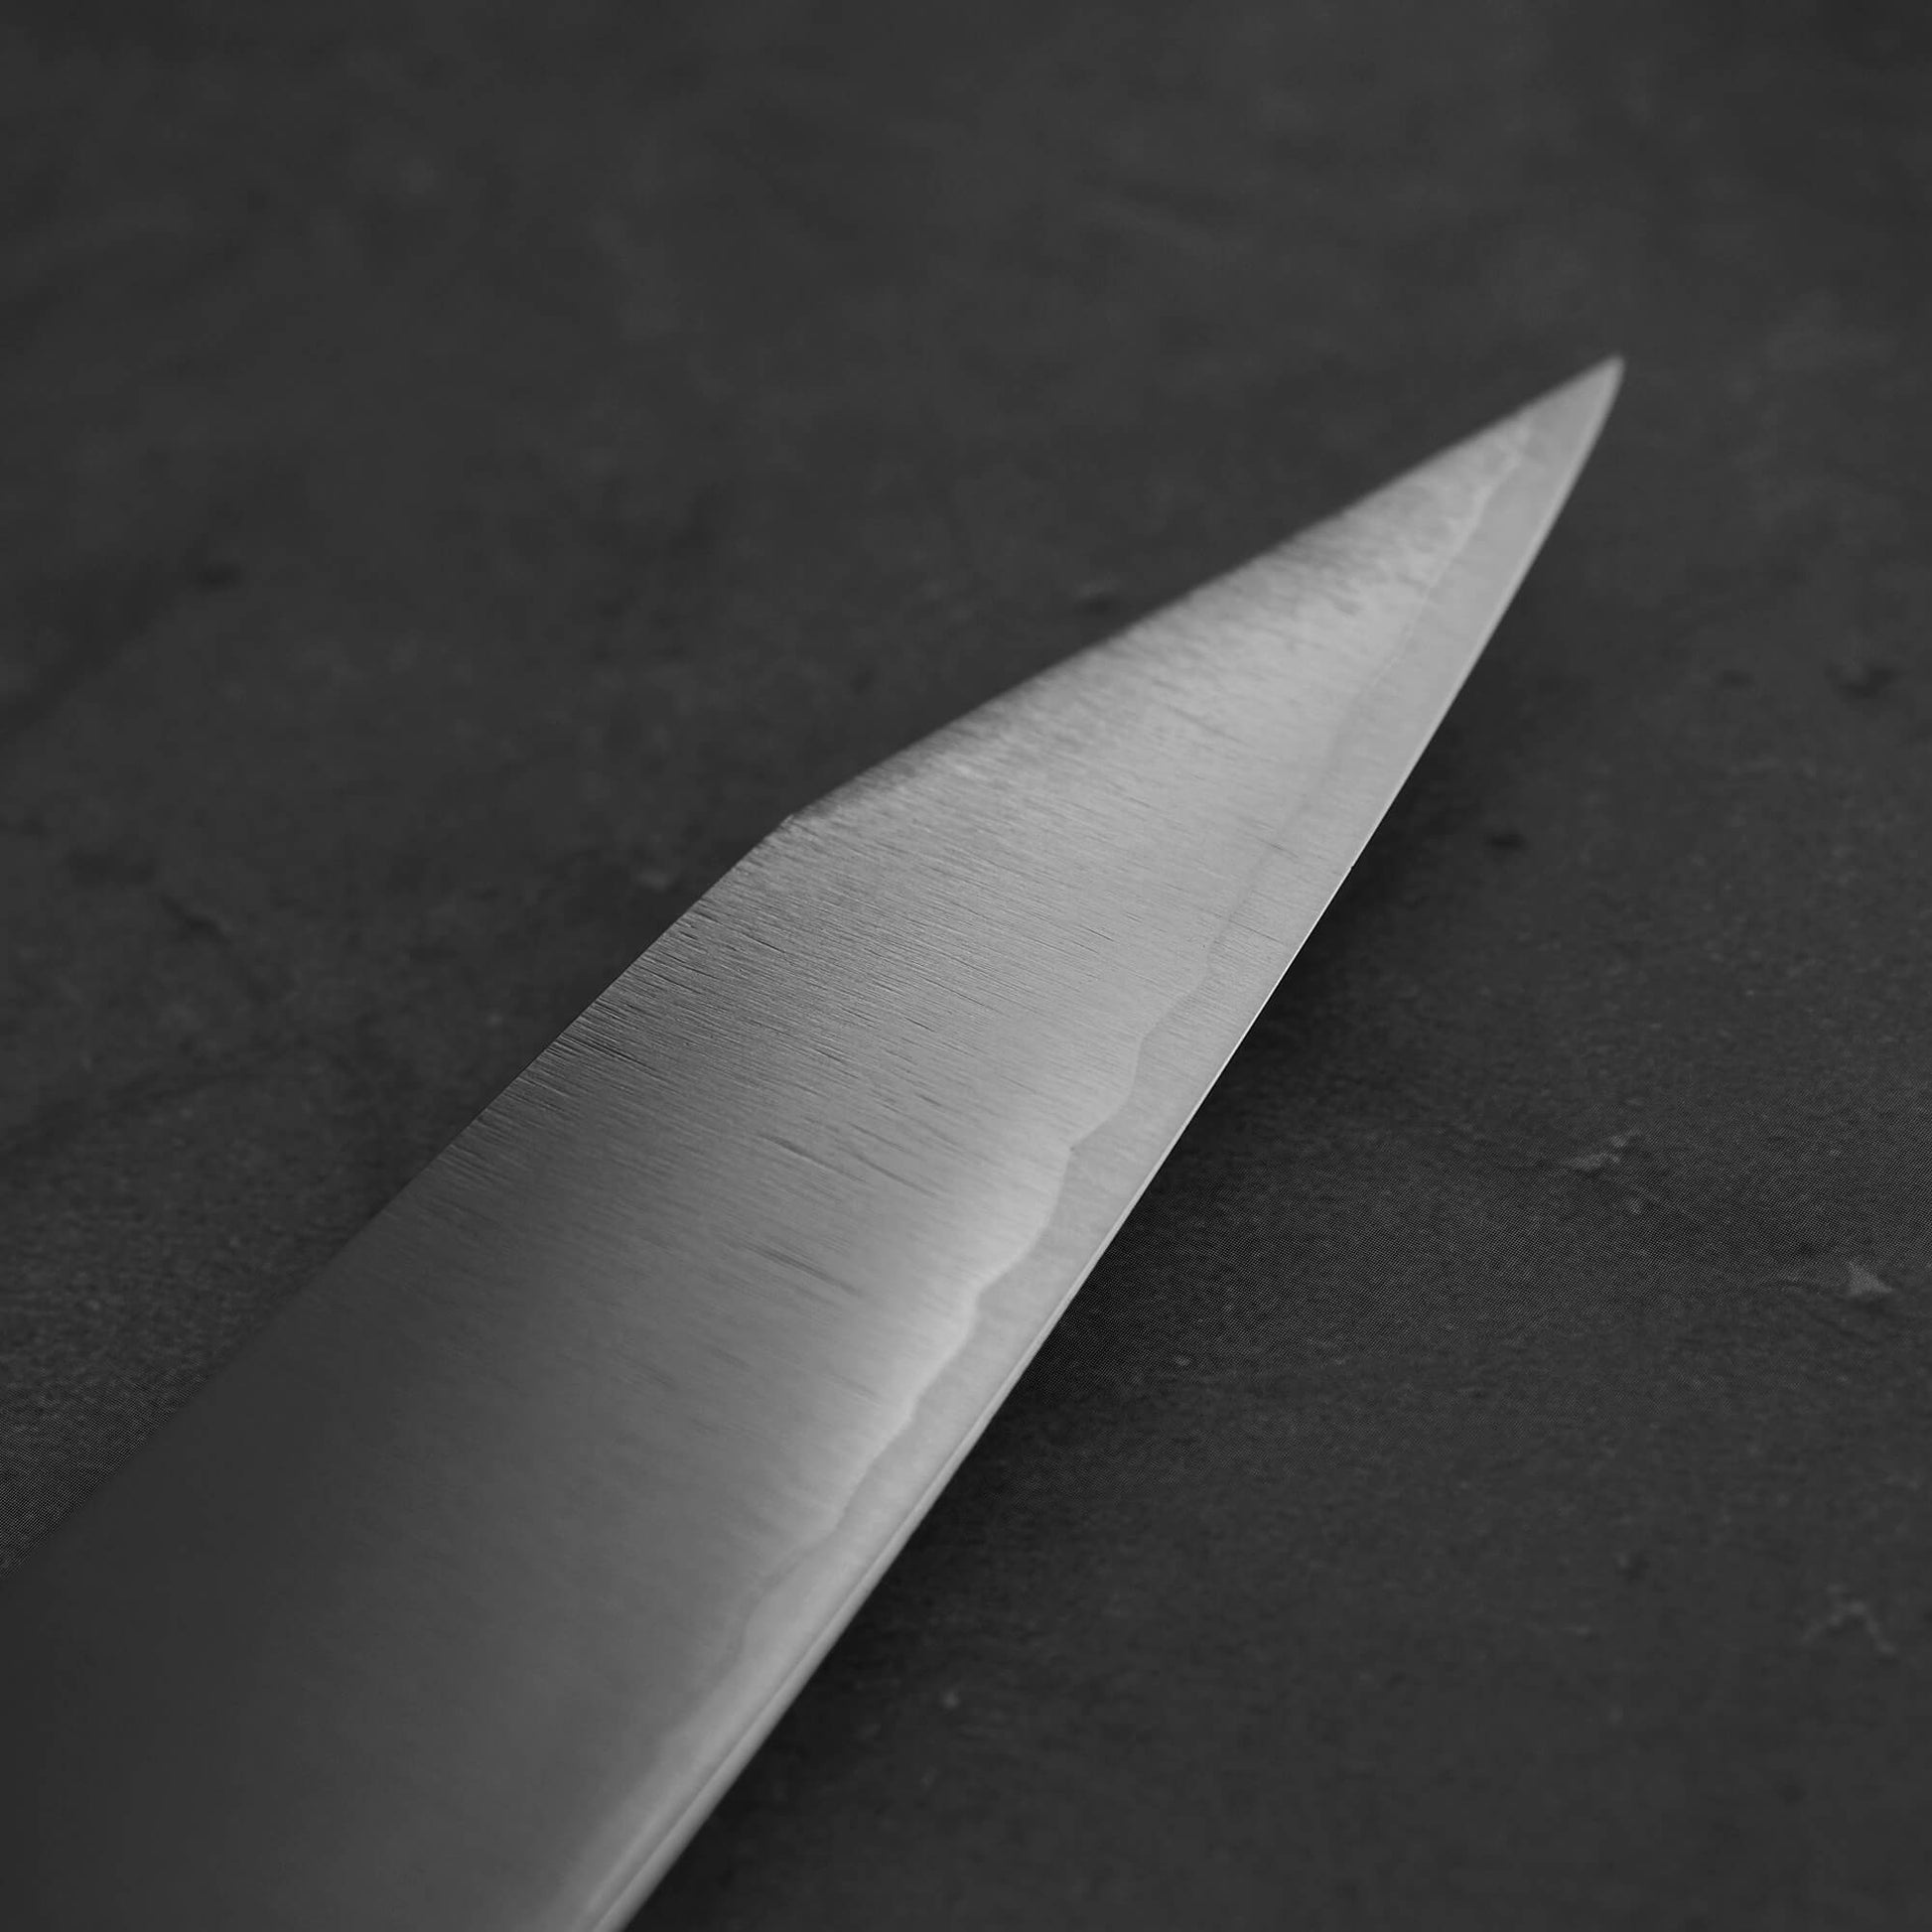 Close up view of Yu Kurosaki HAP40 Gekko kiritsuke sujihiki 270mm. Image focuses on the tip of the right blade side.